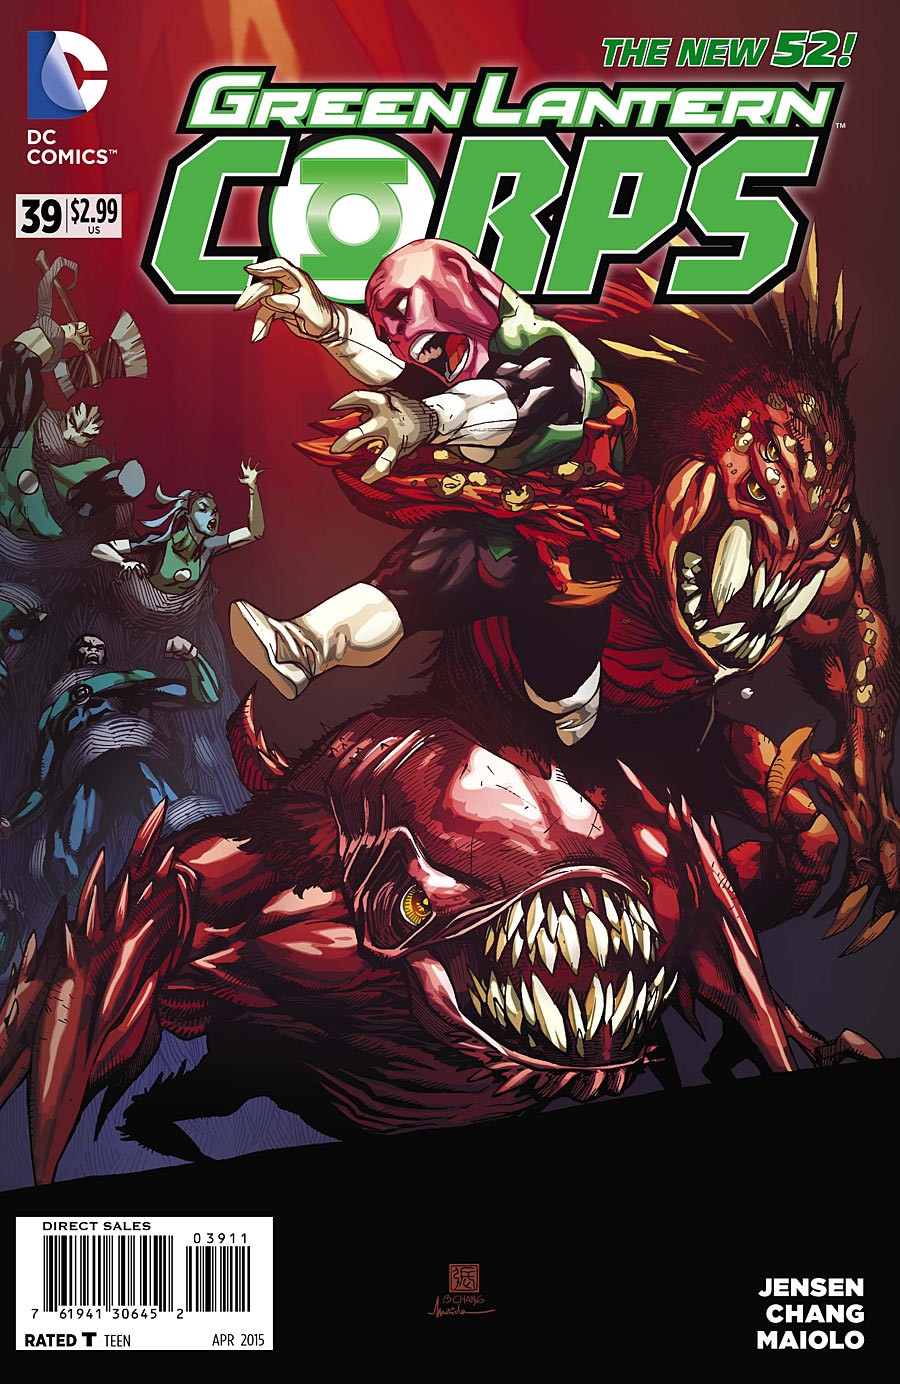 Green Lantern Corps Vol. 3 #39